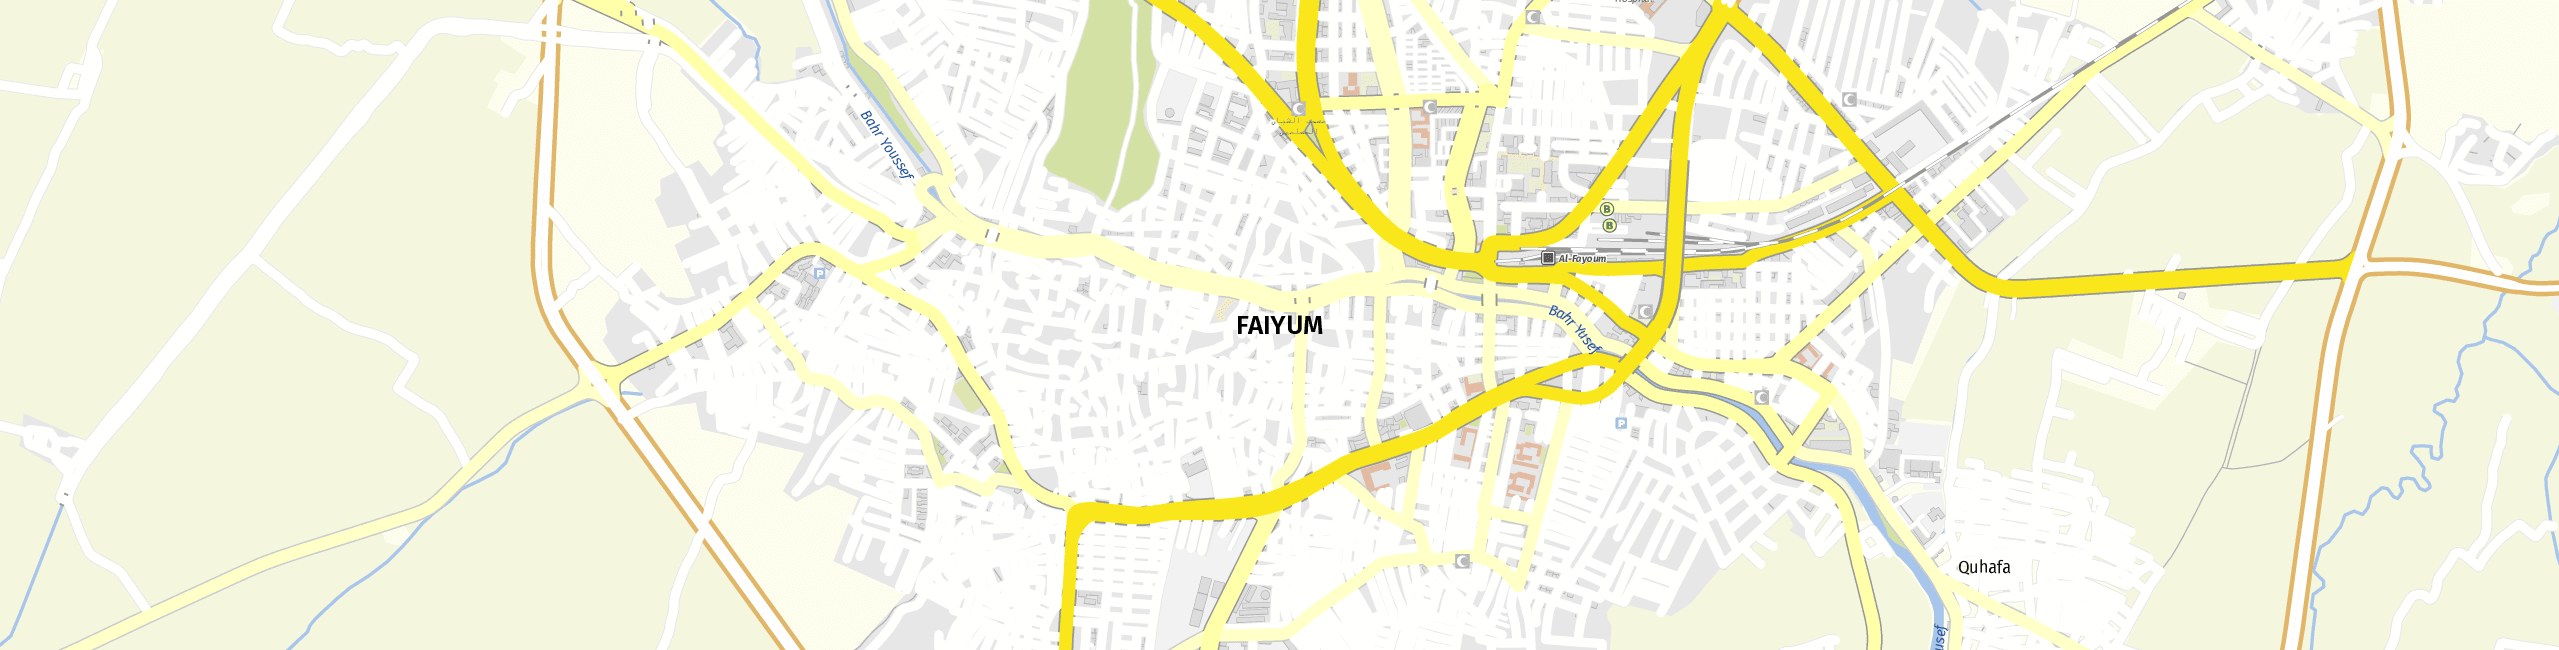 Stadtplan Al-Fayyum zum Downloaden.